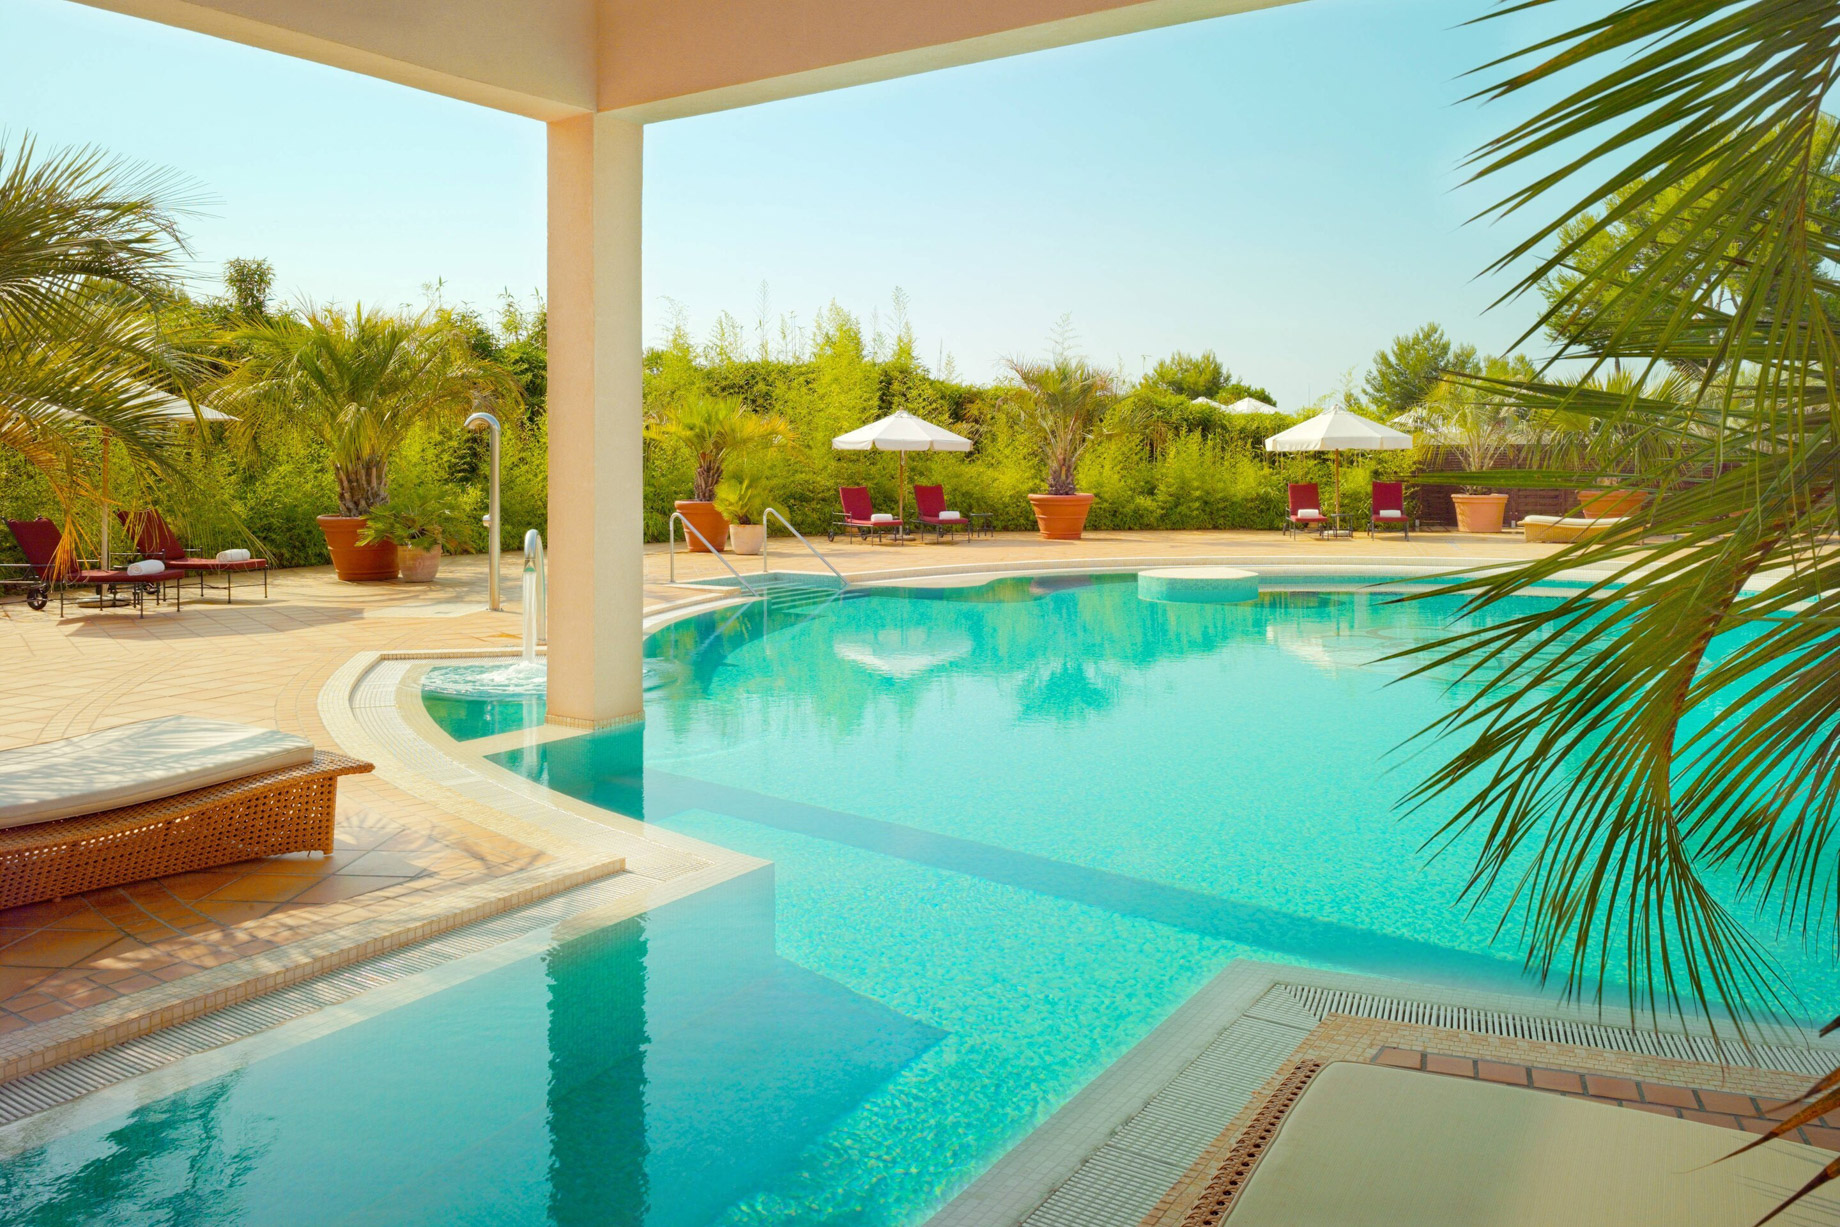 The St. Regis Mardavall Mallorca Resort – Palma de Mallorca, Spain – Exterior Swimming Pool